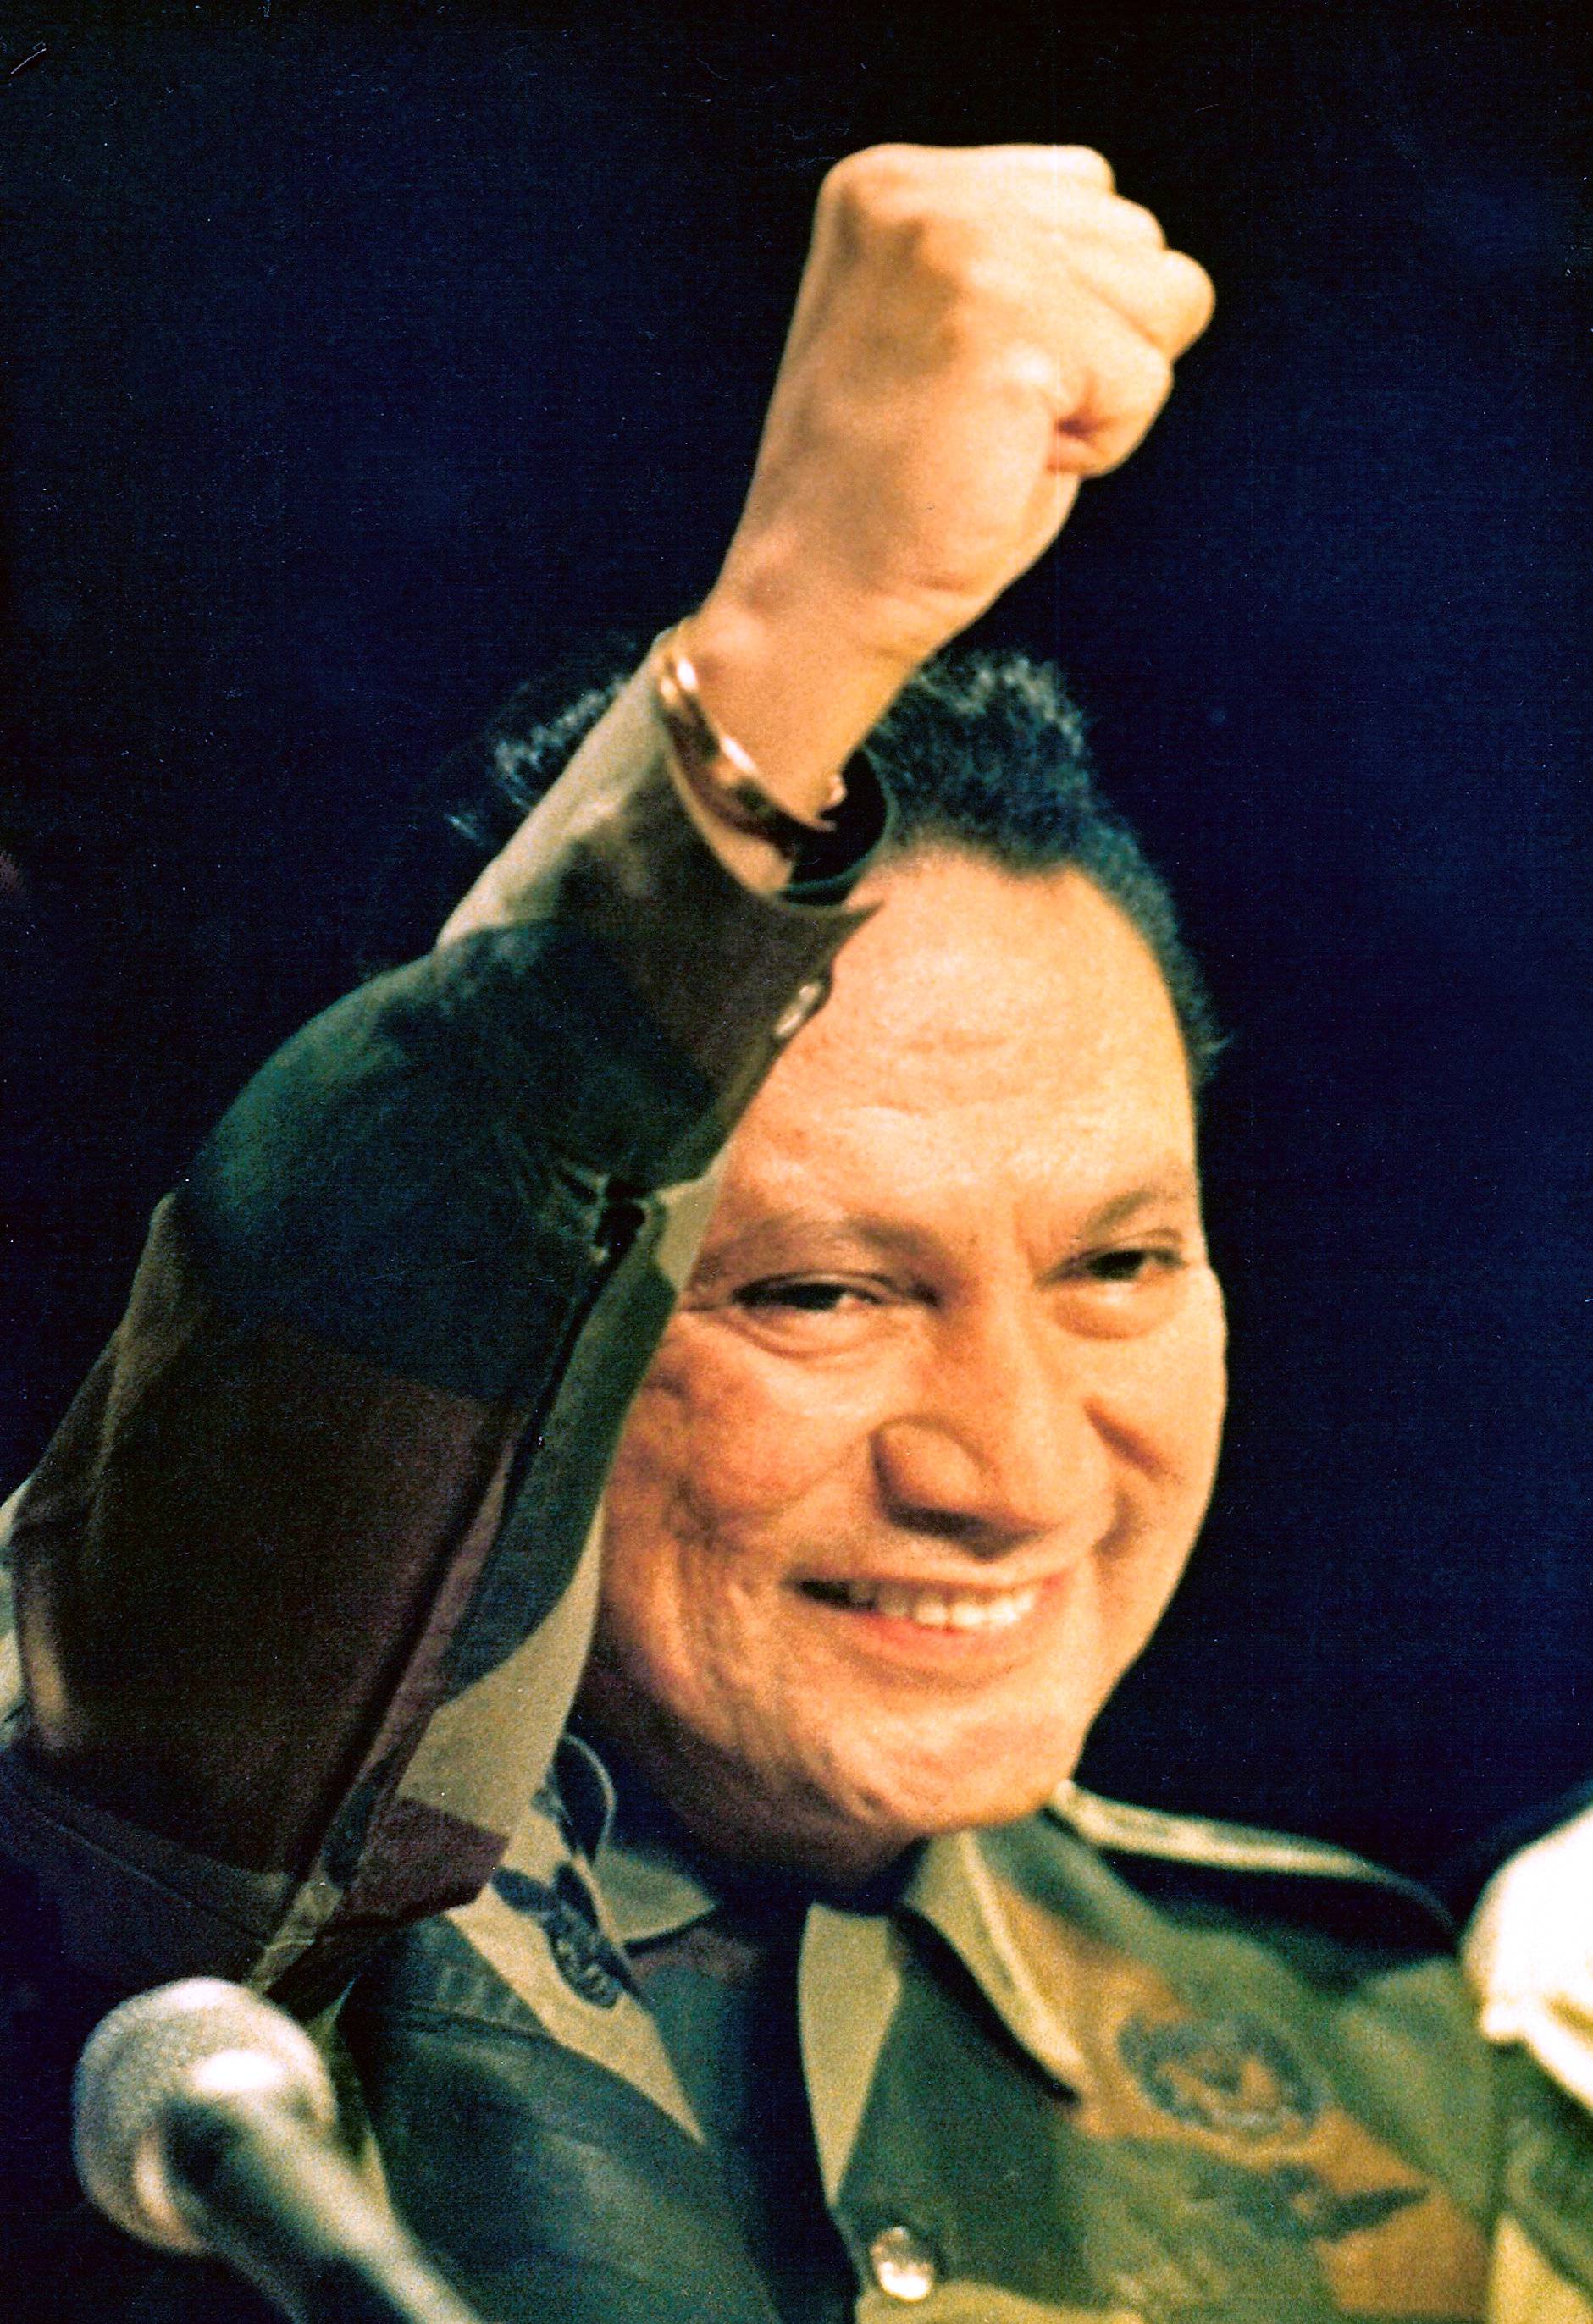 FILE PHOTO: File photo shows Panamanian strongman Noriega giving a speech in Panama City